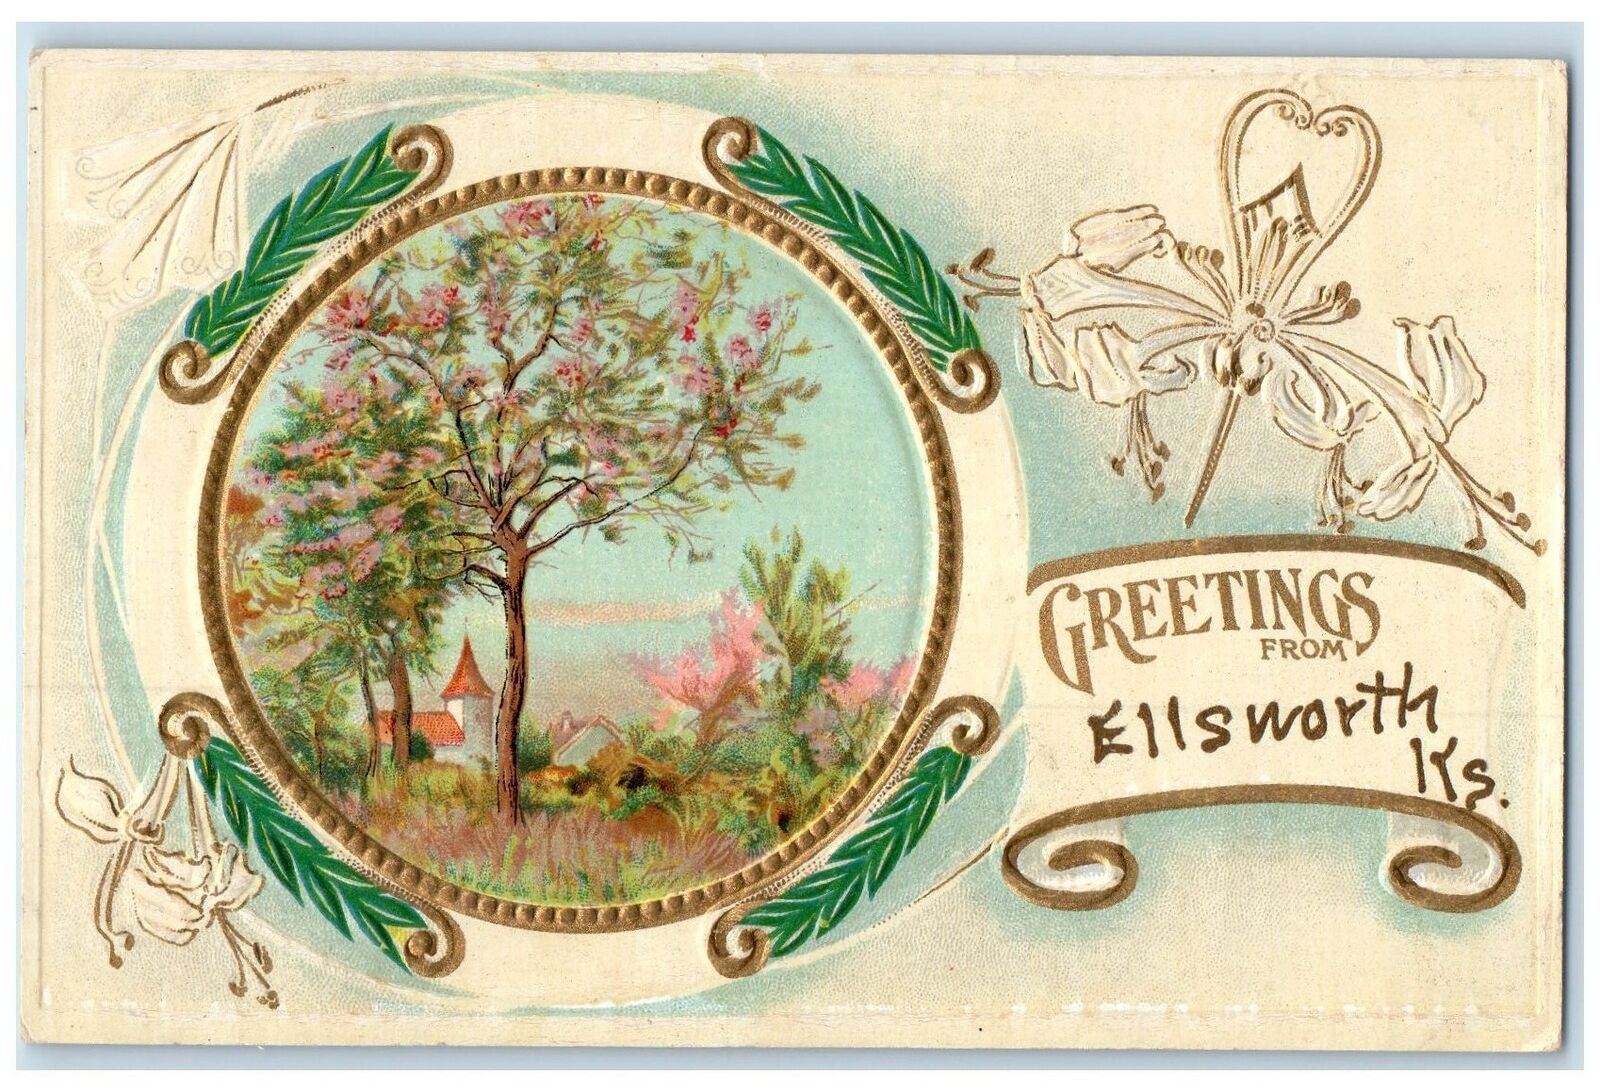 1911 Greetings From Ellsworth Kansas KS Posted Embossed Trees Flowers Postcard